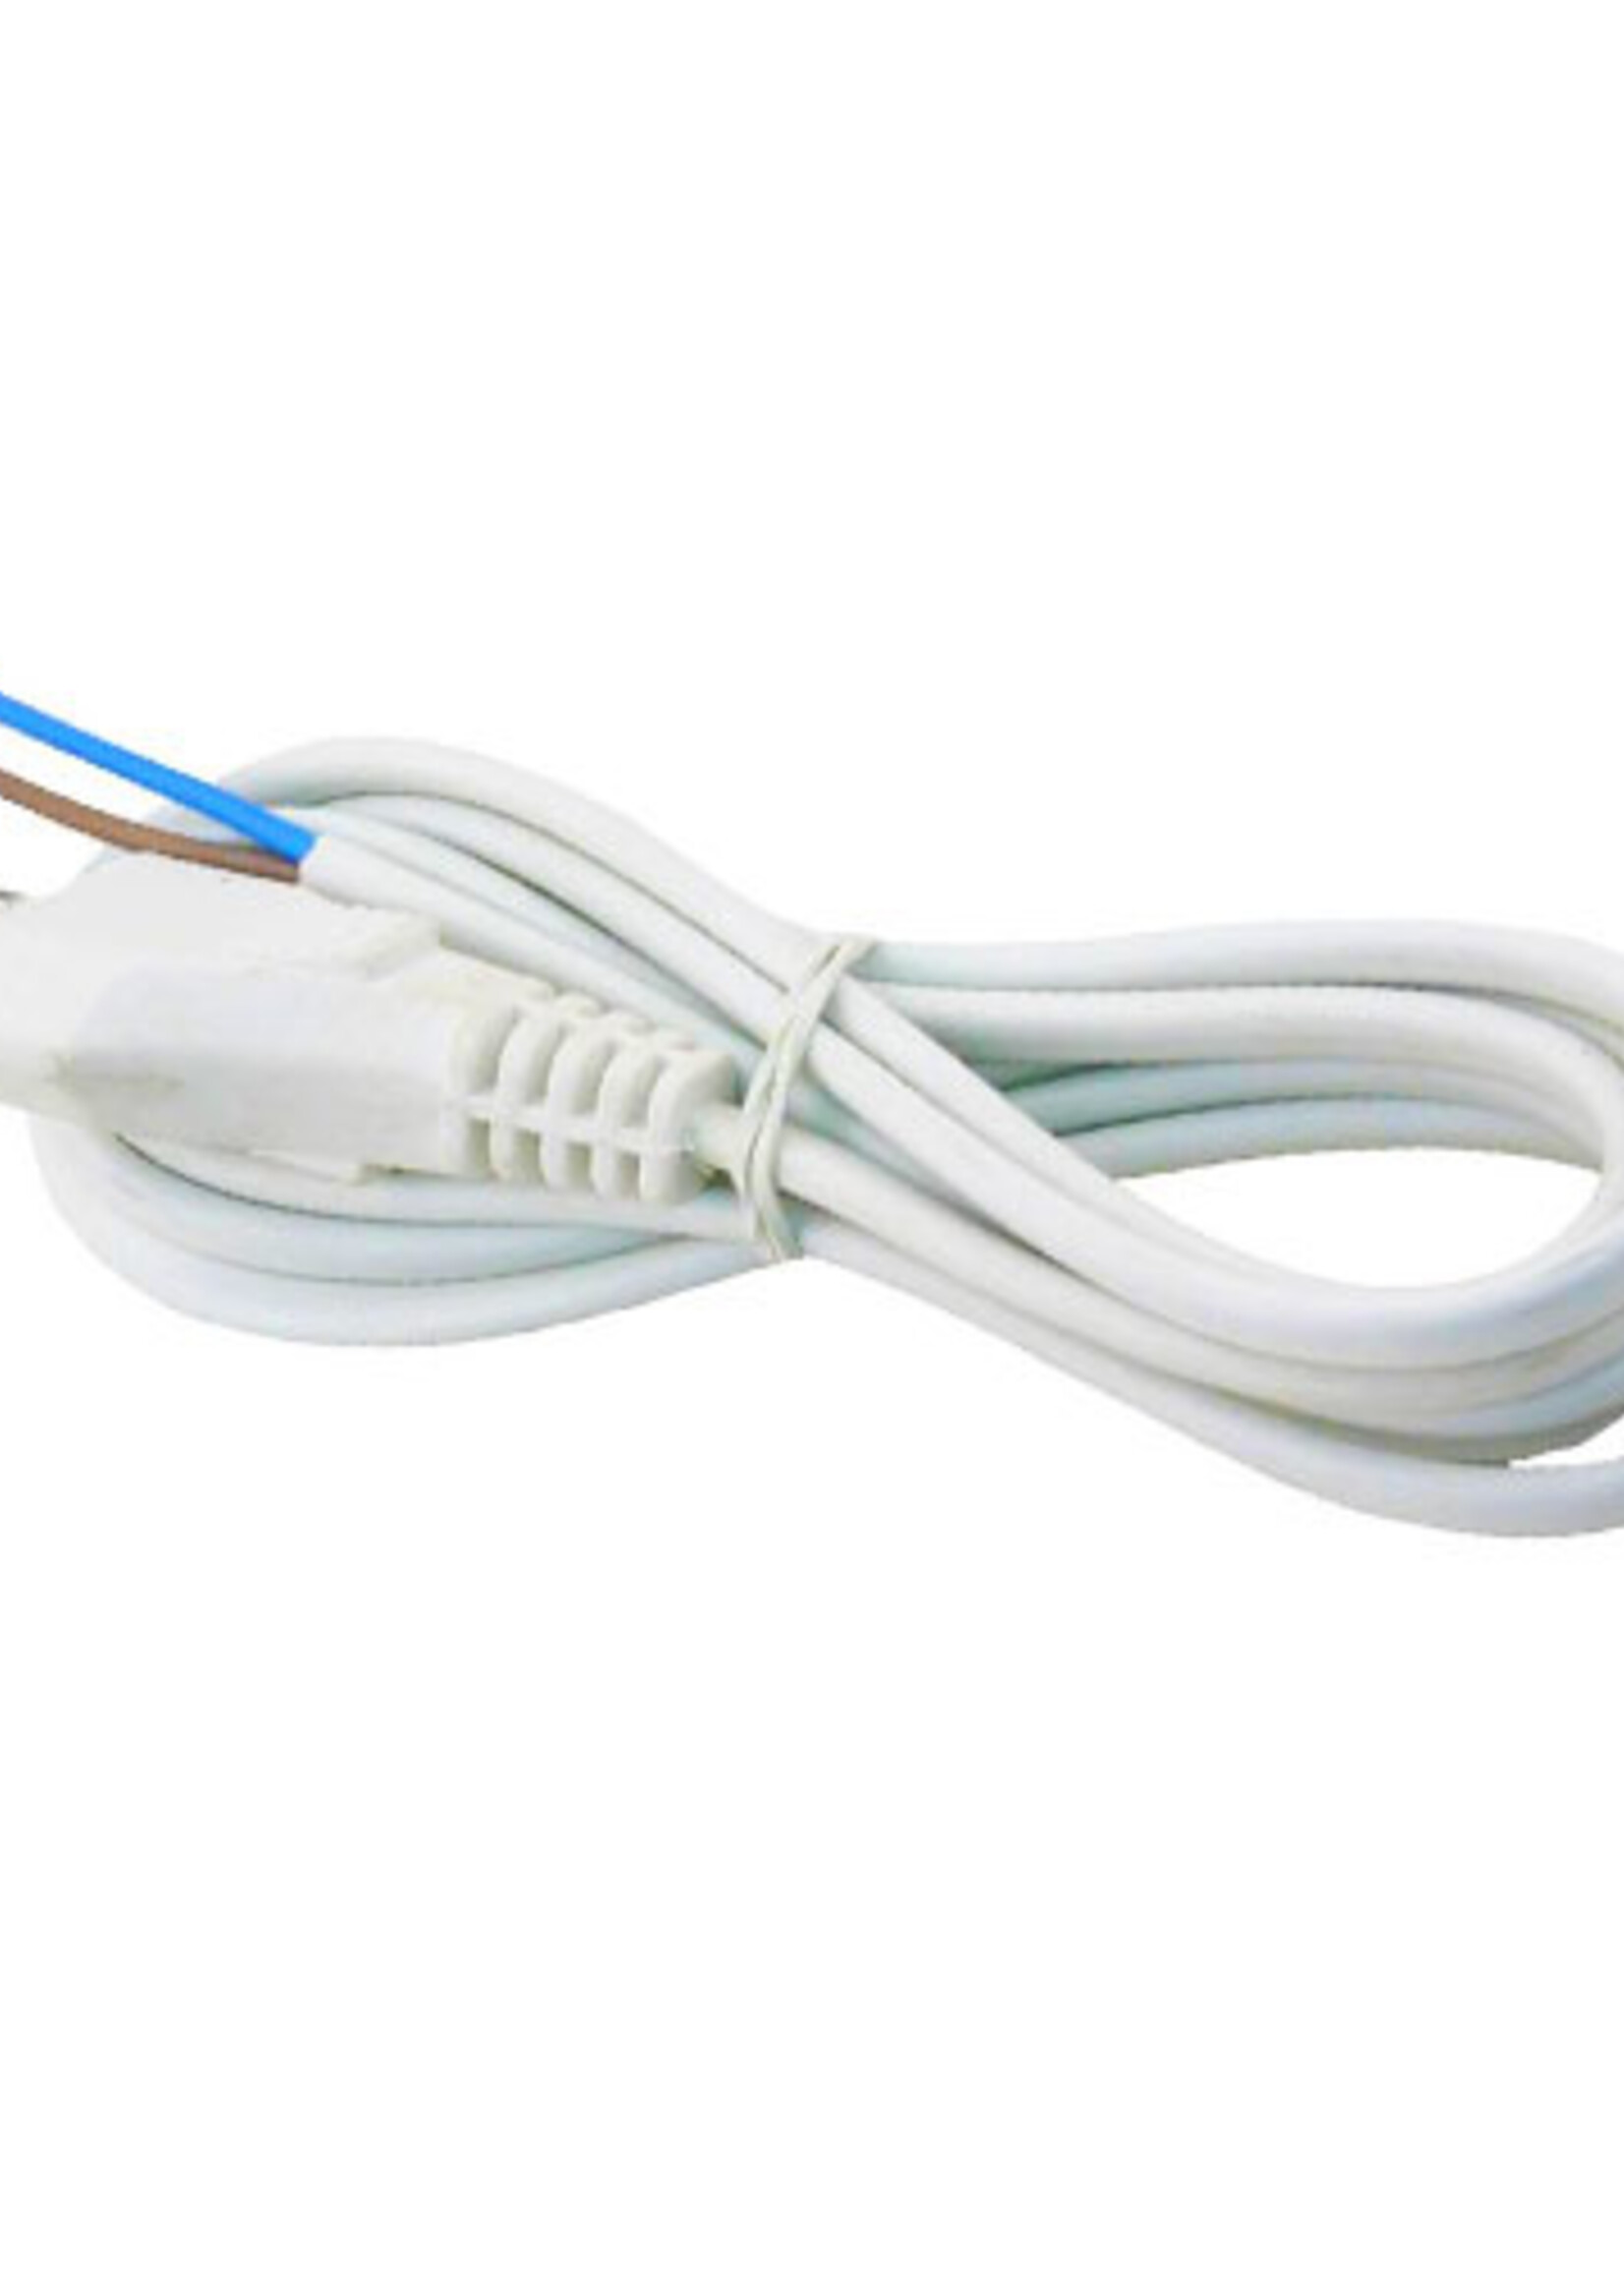 LEDWINKEL-Online Netsnoer met eu plug 1,5 meter 230V